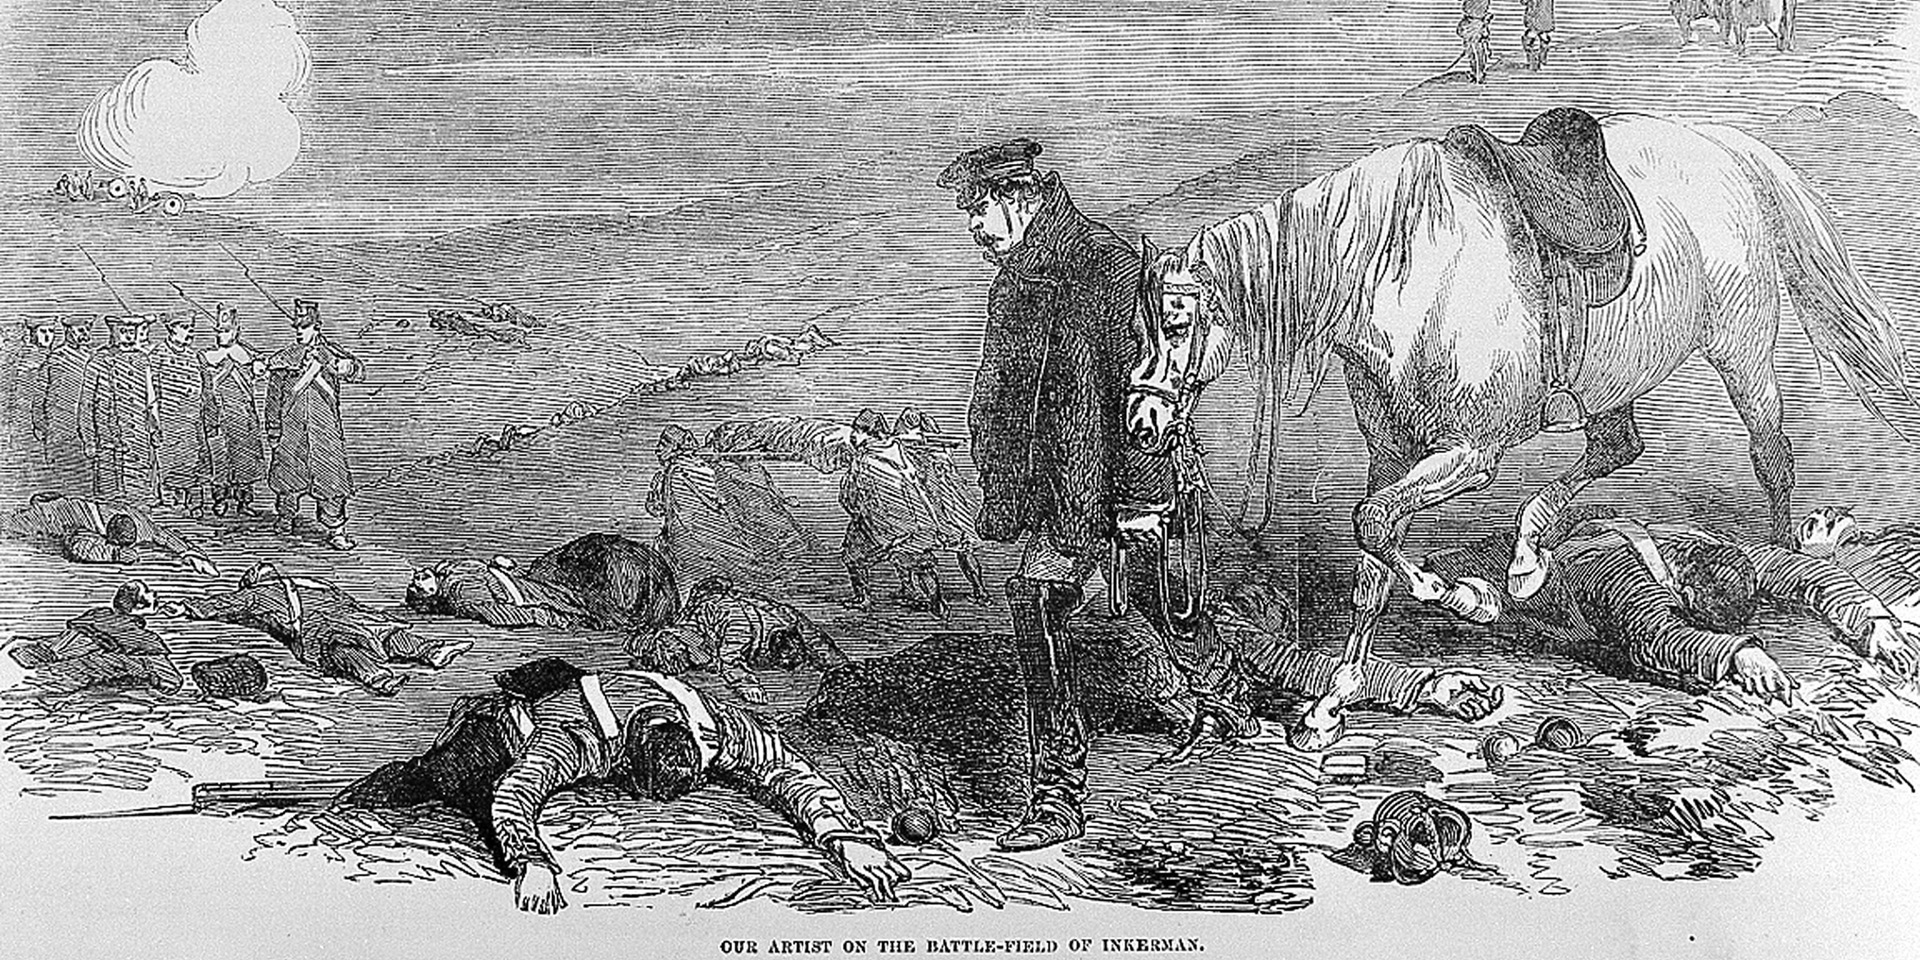 ‘Our artist on the battlefieldof Inkerman.’ The Illustrated London News, 3 Feb 1855 